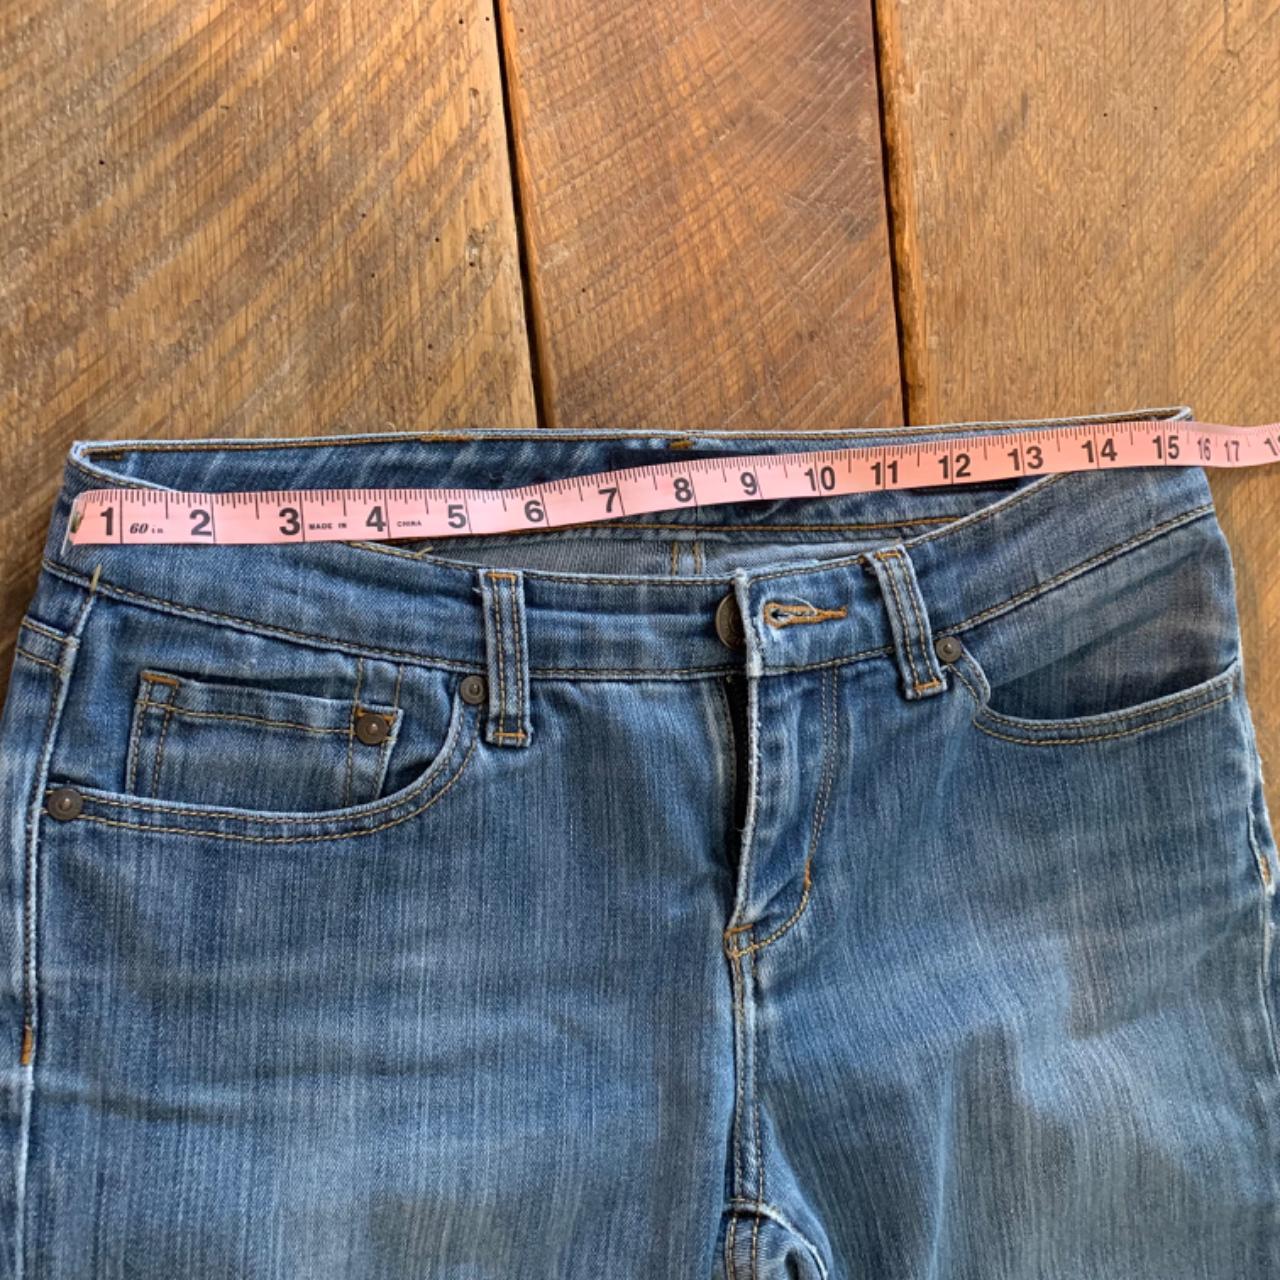 Seven7 brand jeans